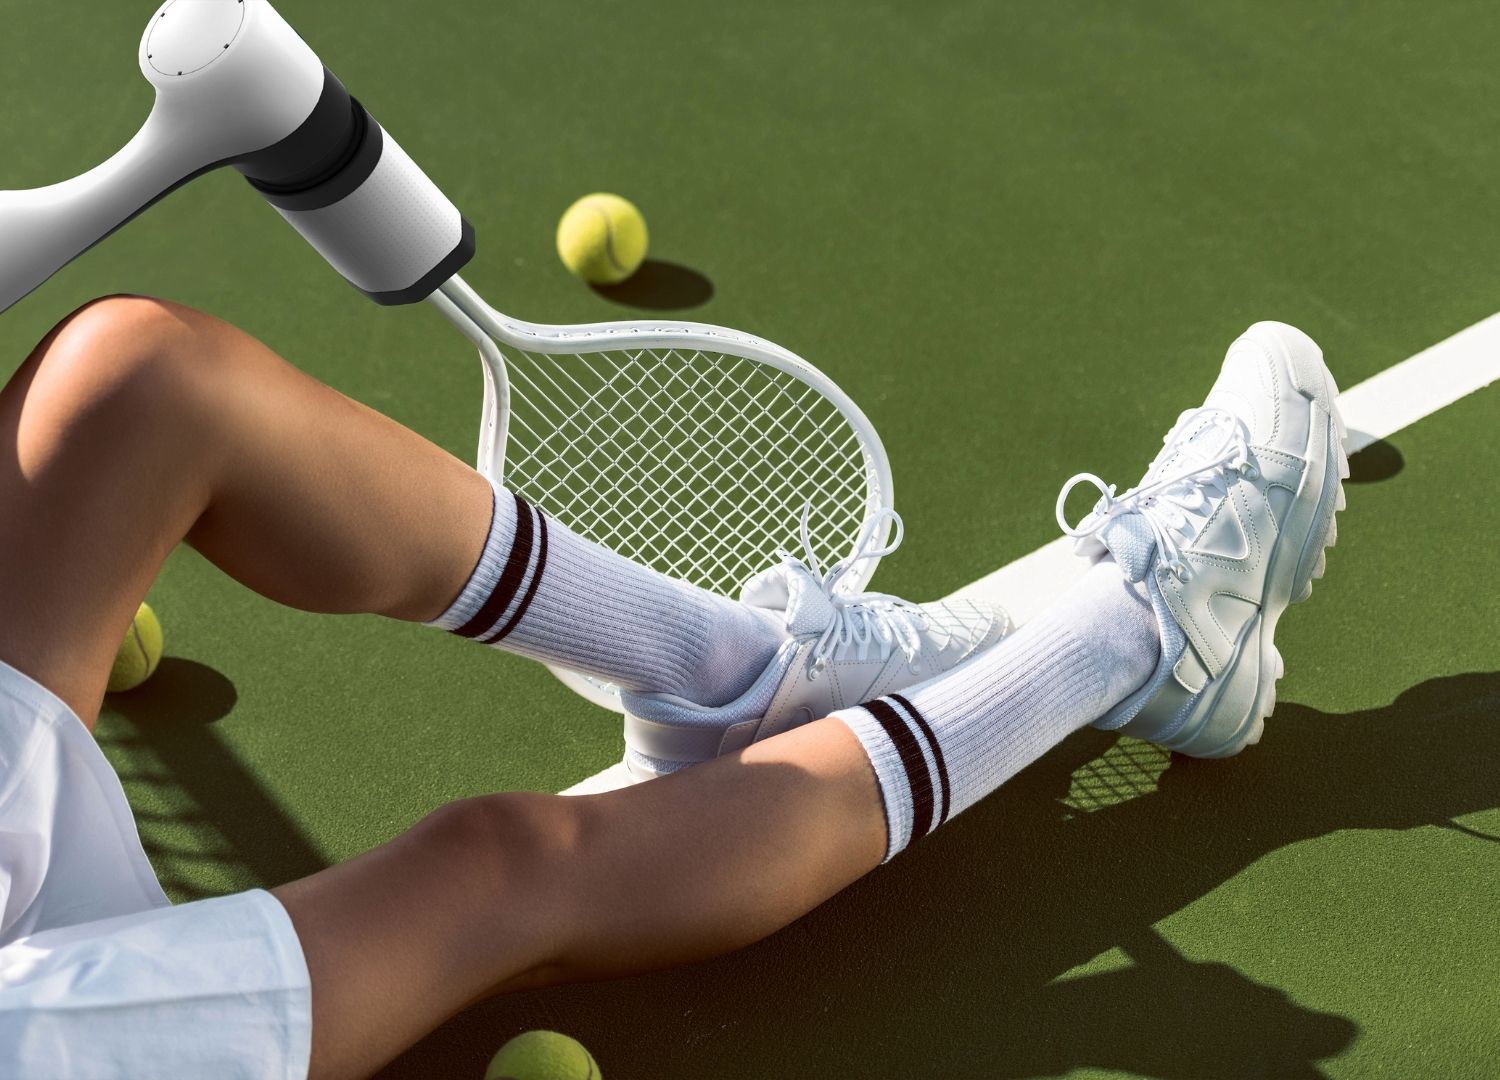 Volta tennis prosthetic by Nacho Vilanova